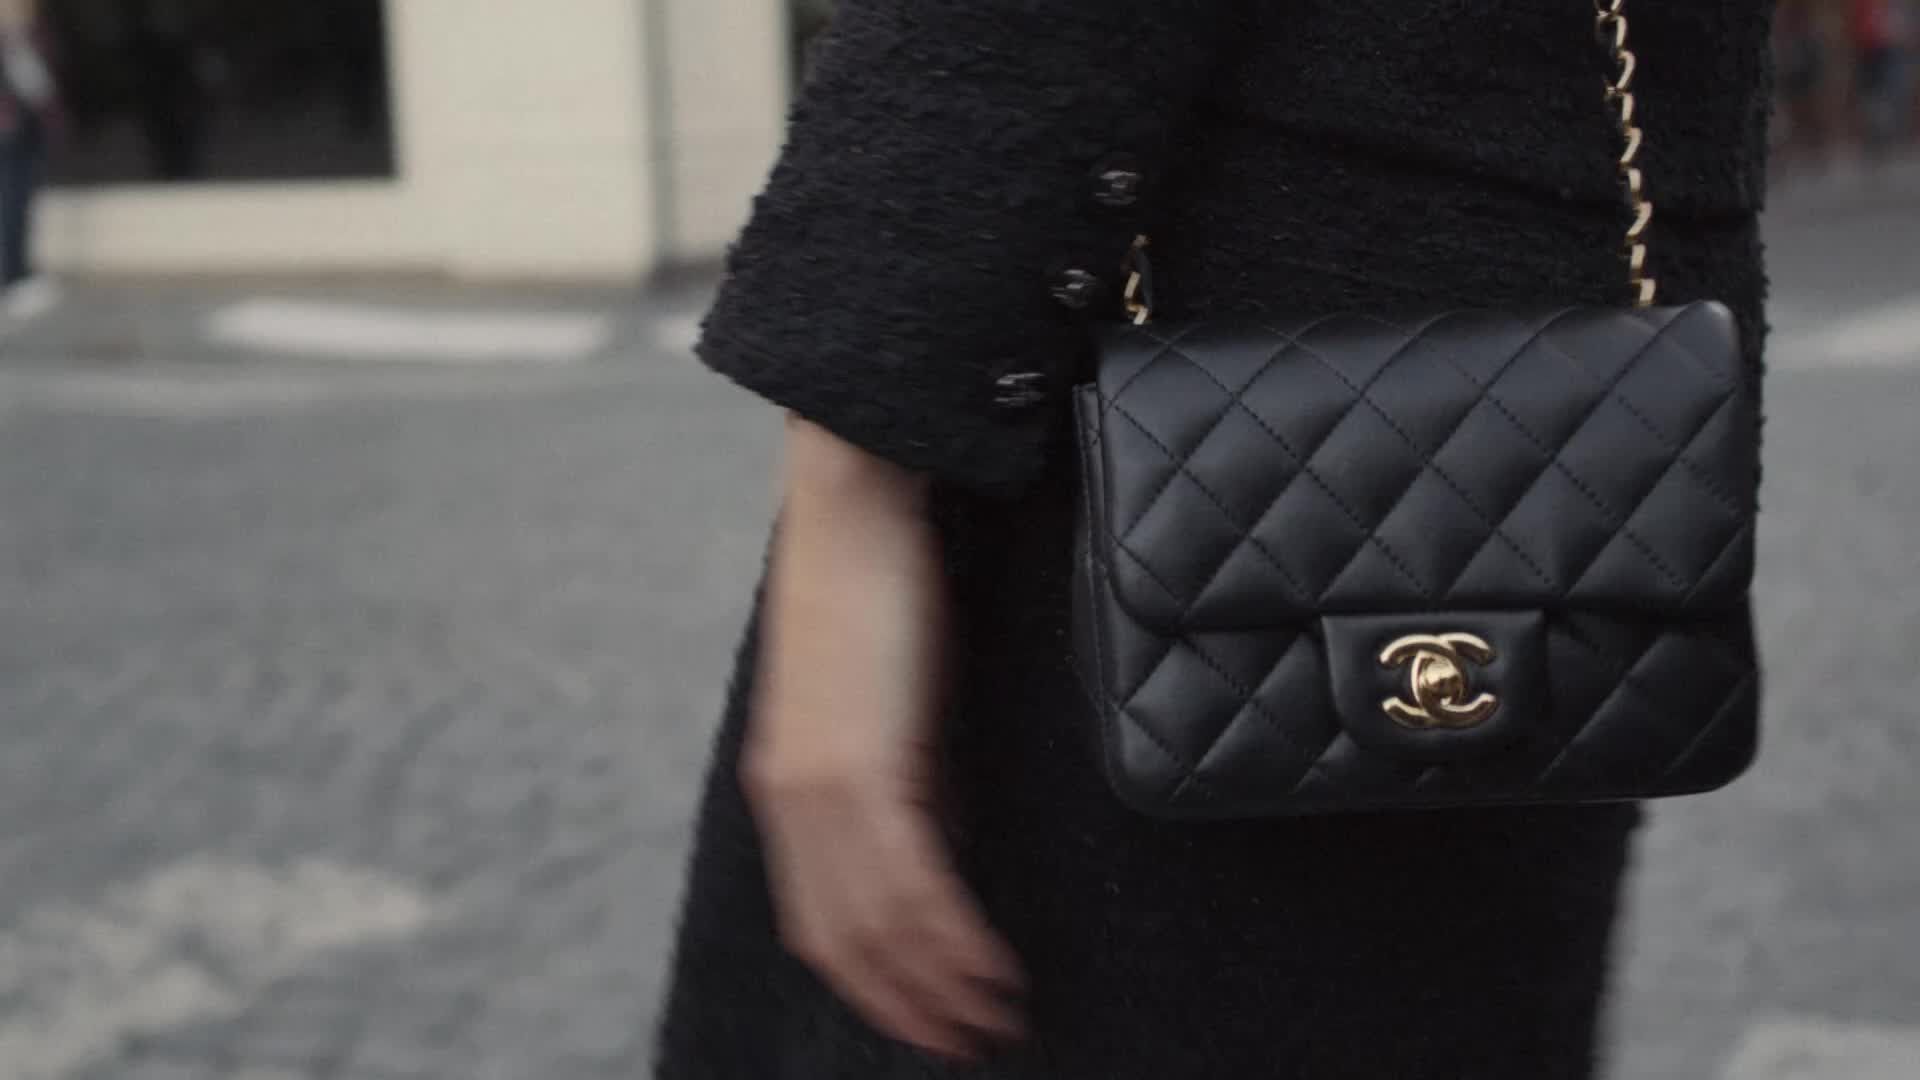 Take A Sneak Peak Inside Chanel's Factory 5 Collection - PurseBop